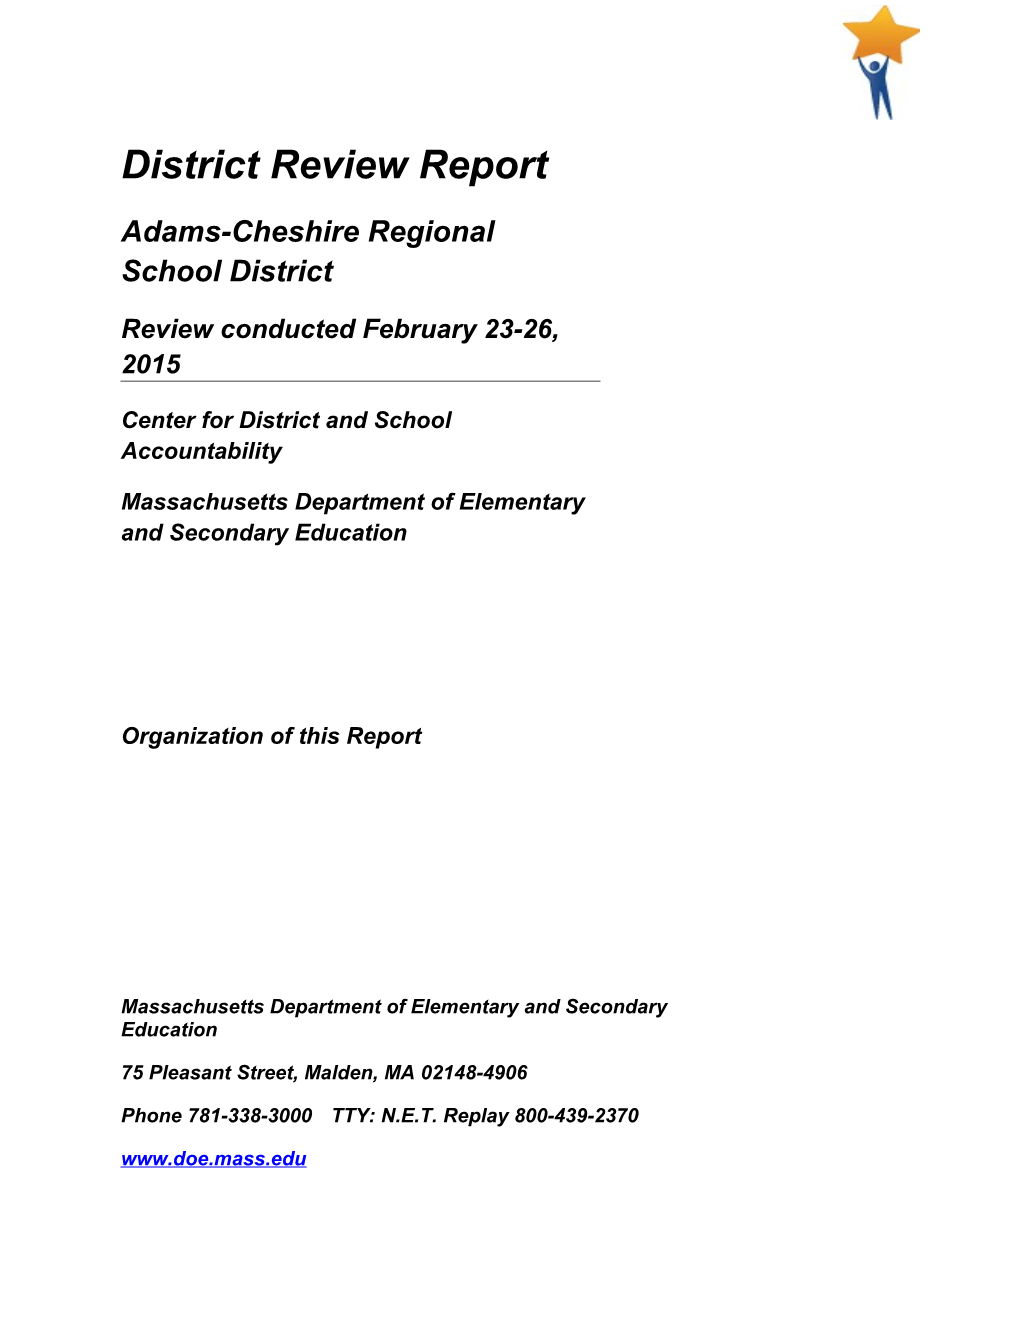 Adams-Cheshire Regional School District Review - 2015